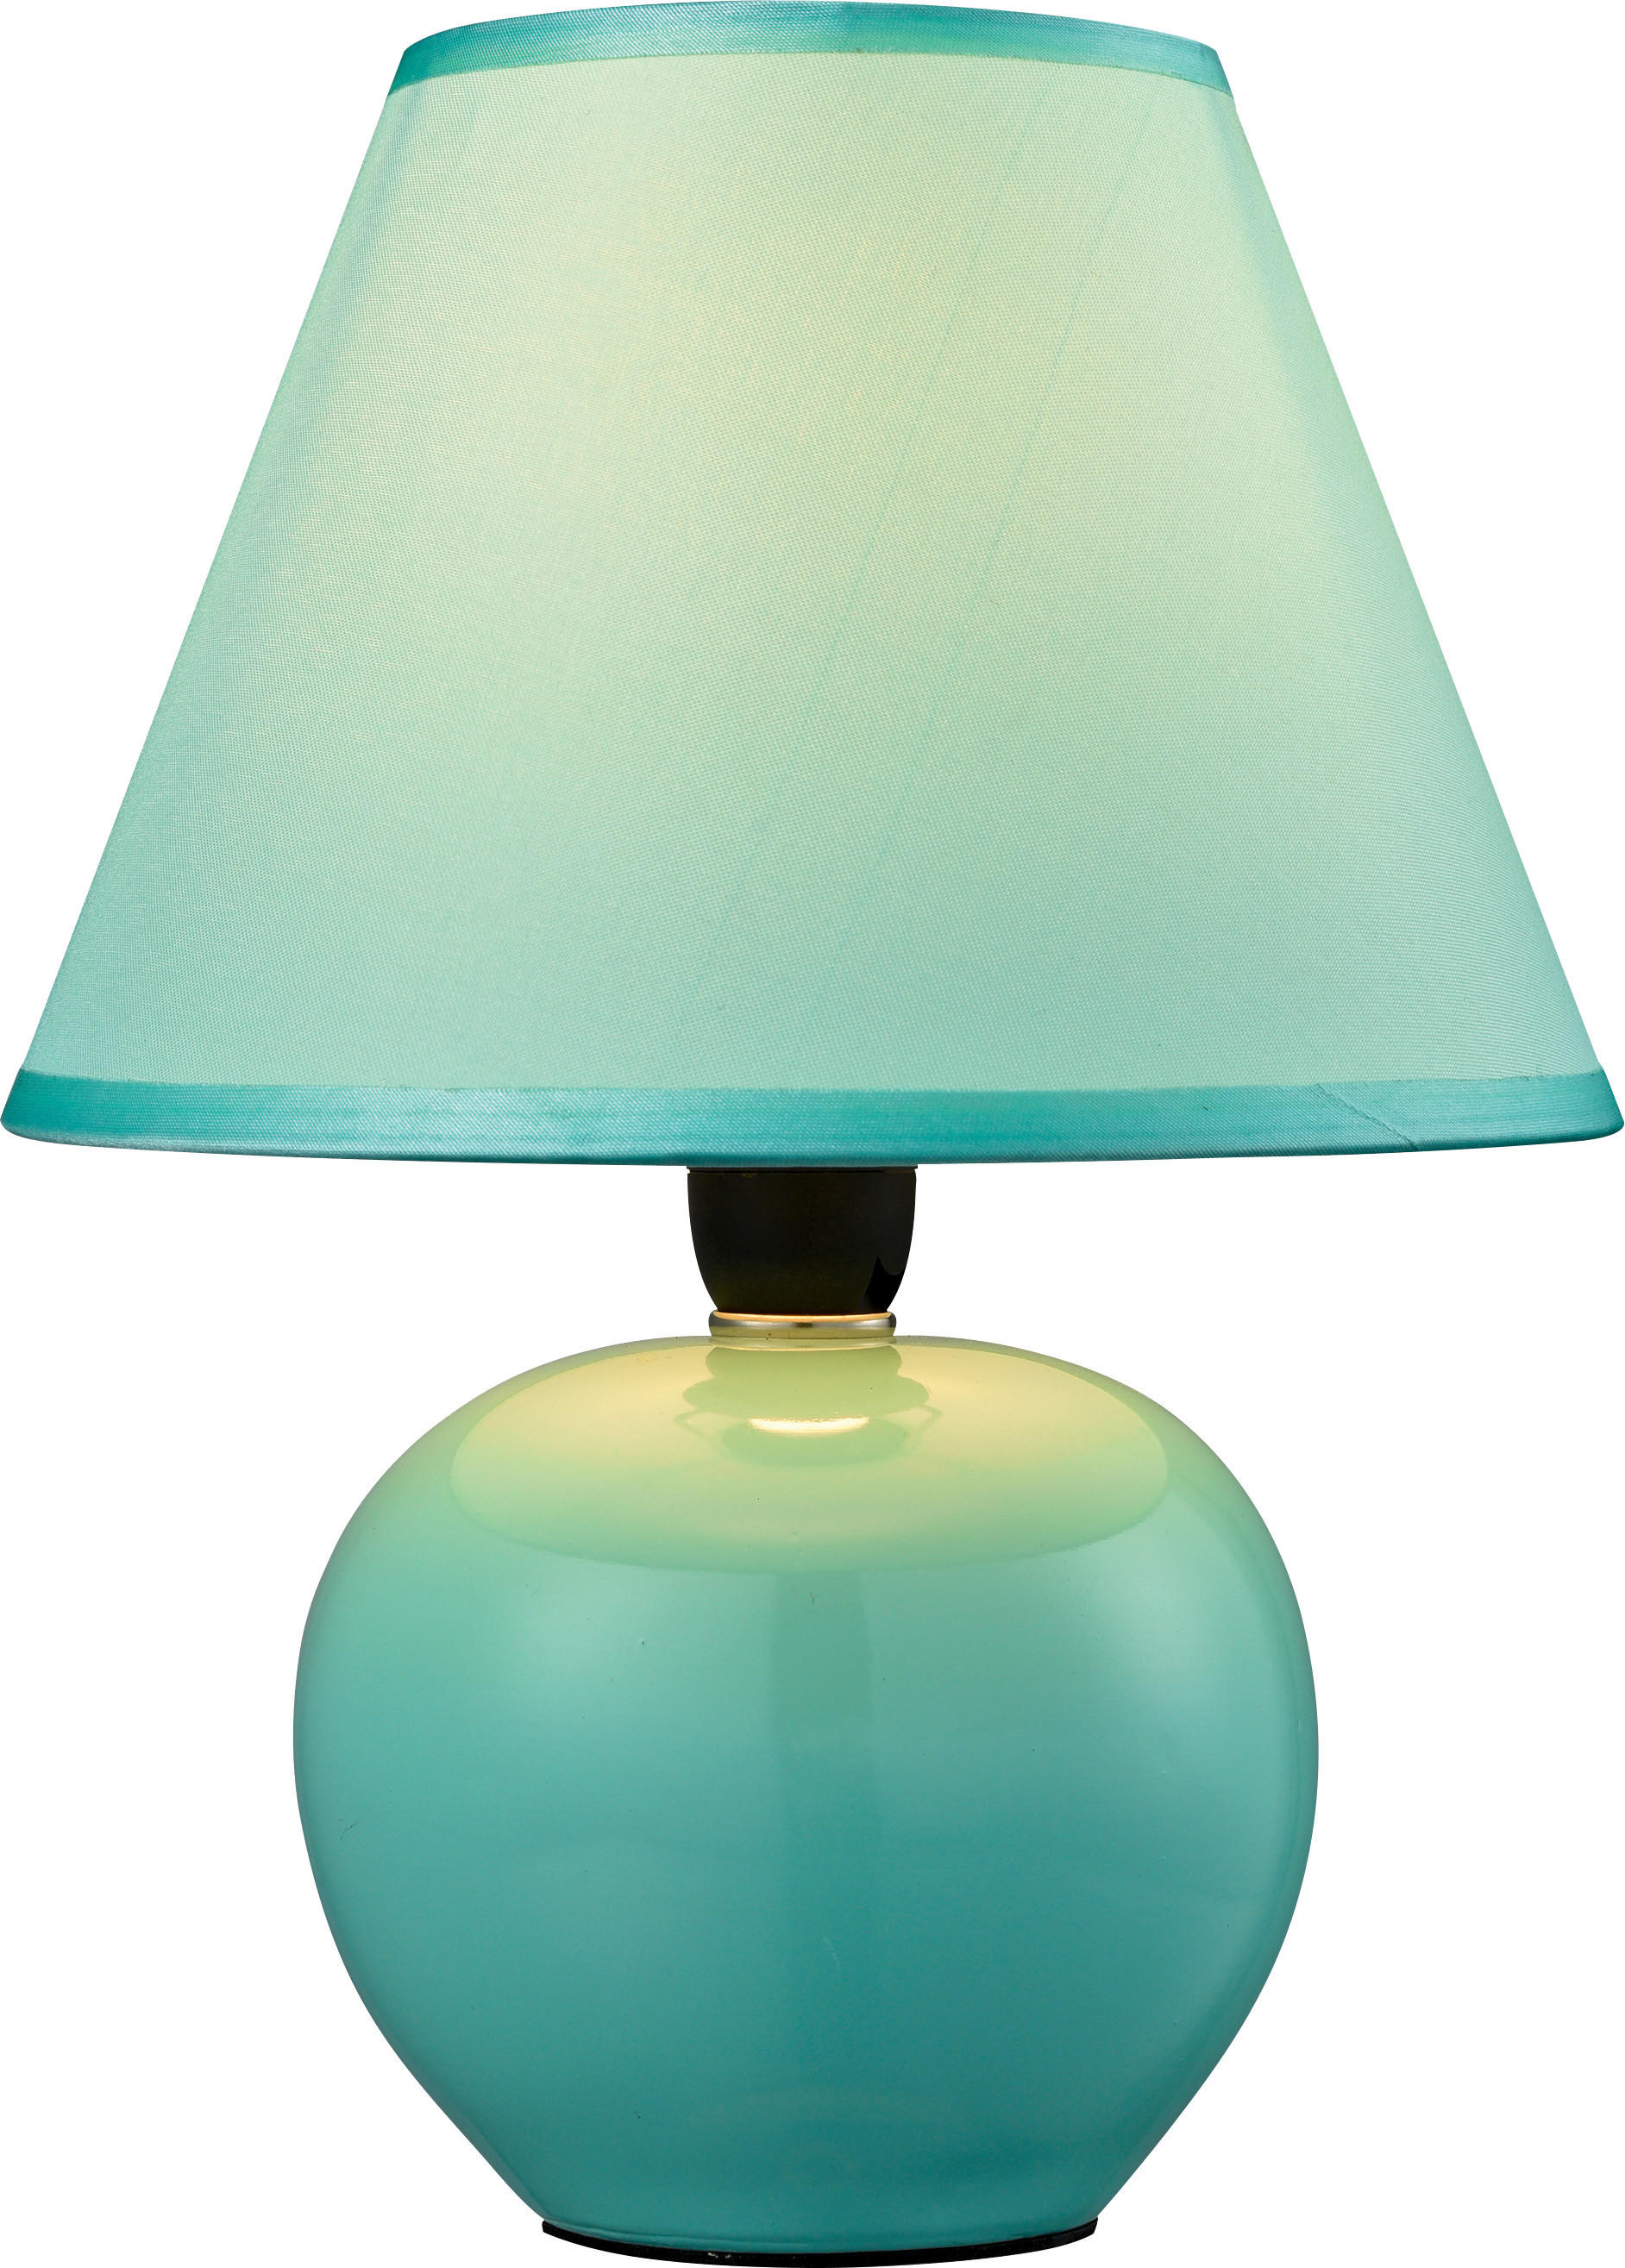 STOLNÁ LAMPA, 18/23 cm  - zelená, Konventionell, textil/keramika (18/23cm) - James Wood